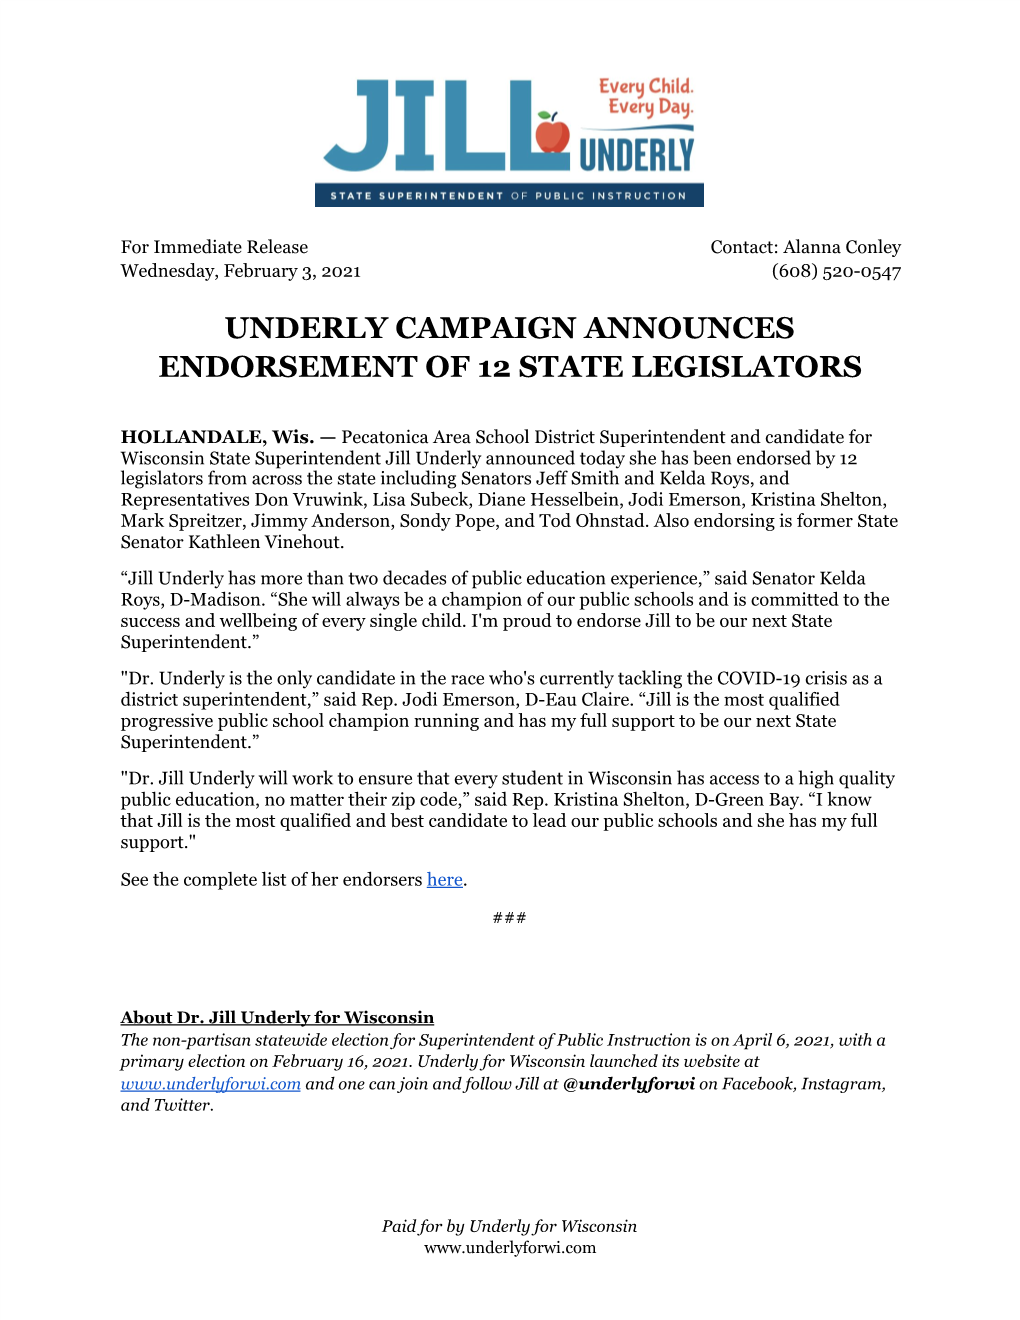 Underly Campaign Announces Endorsement of 12 State Legislators